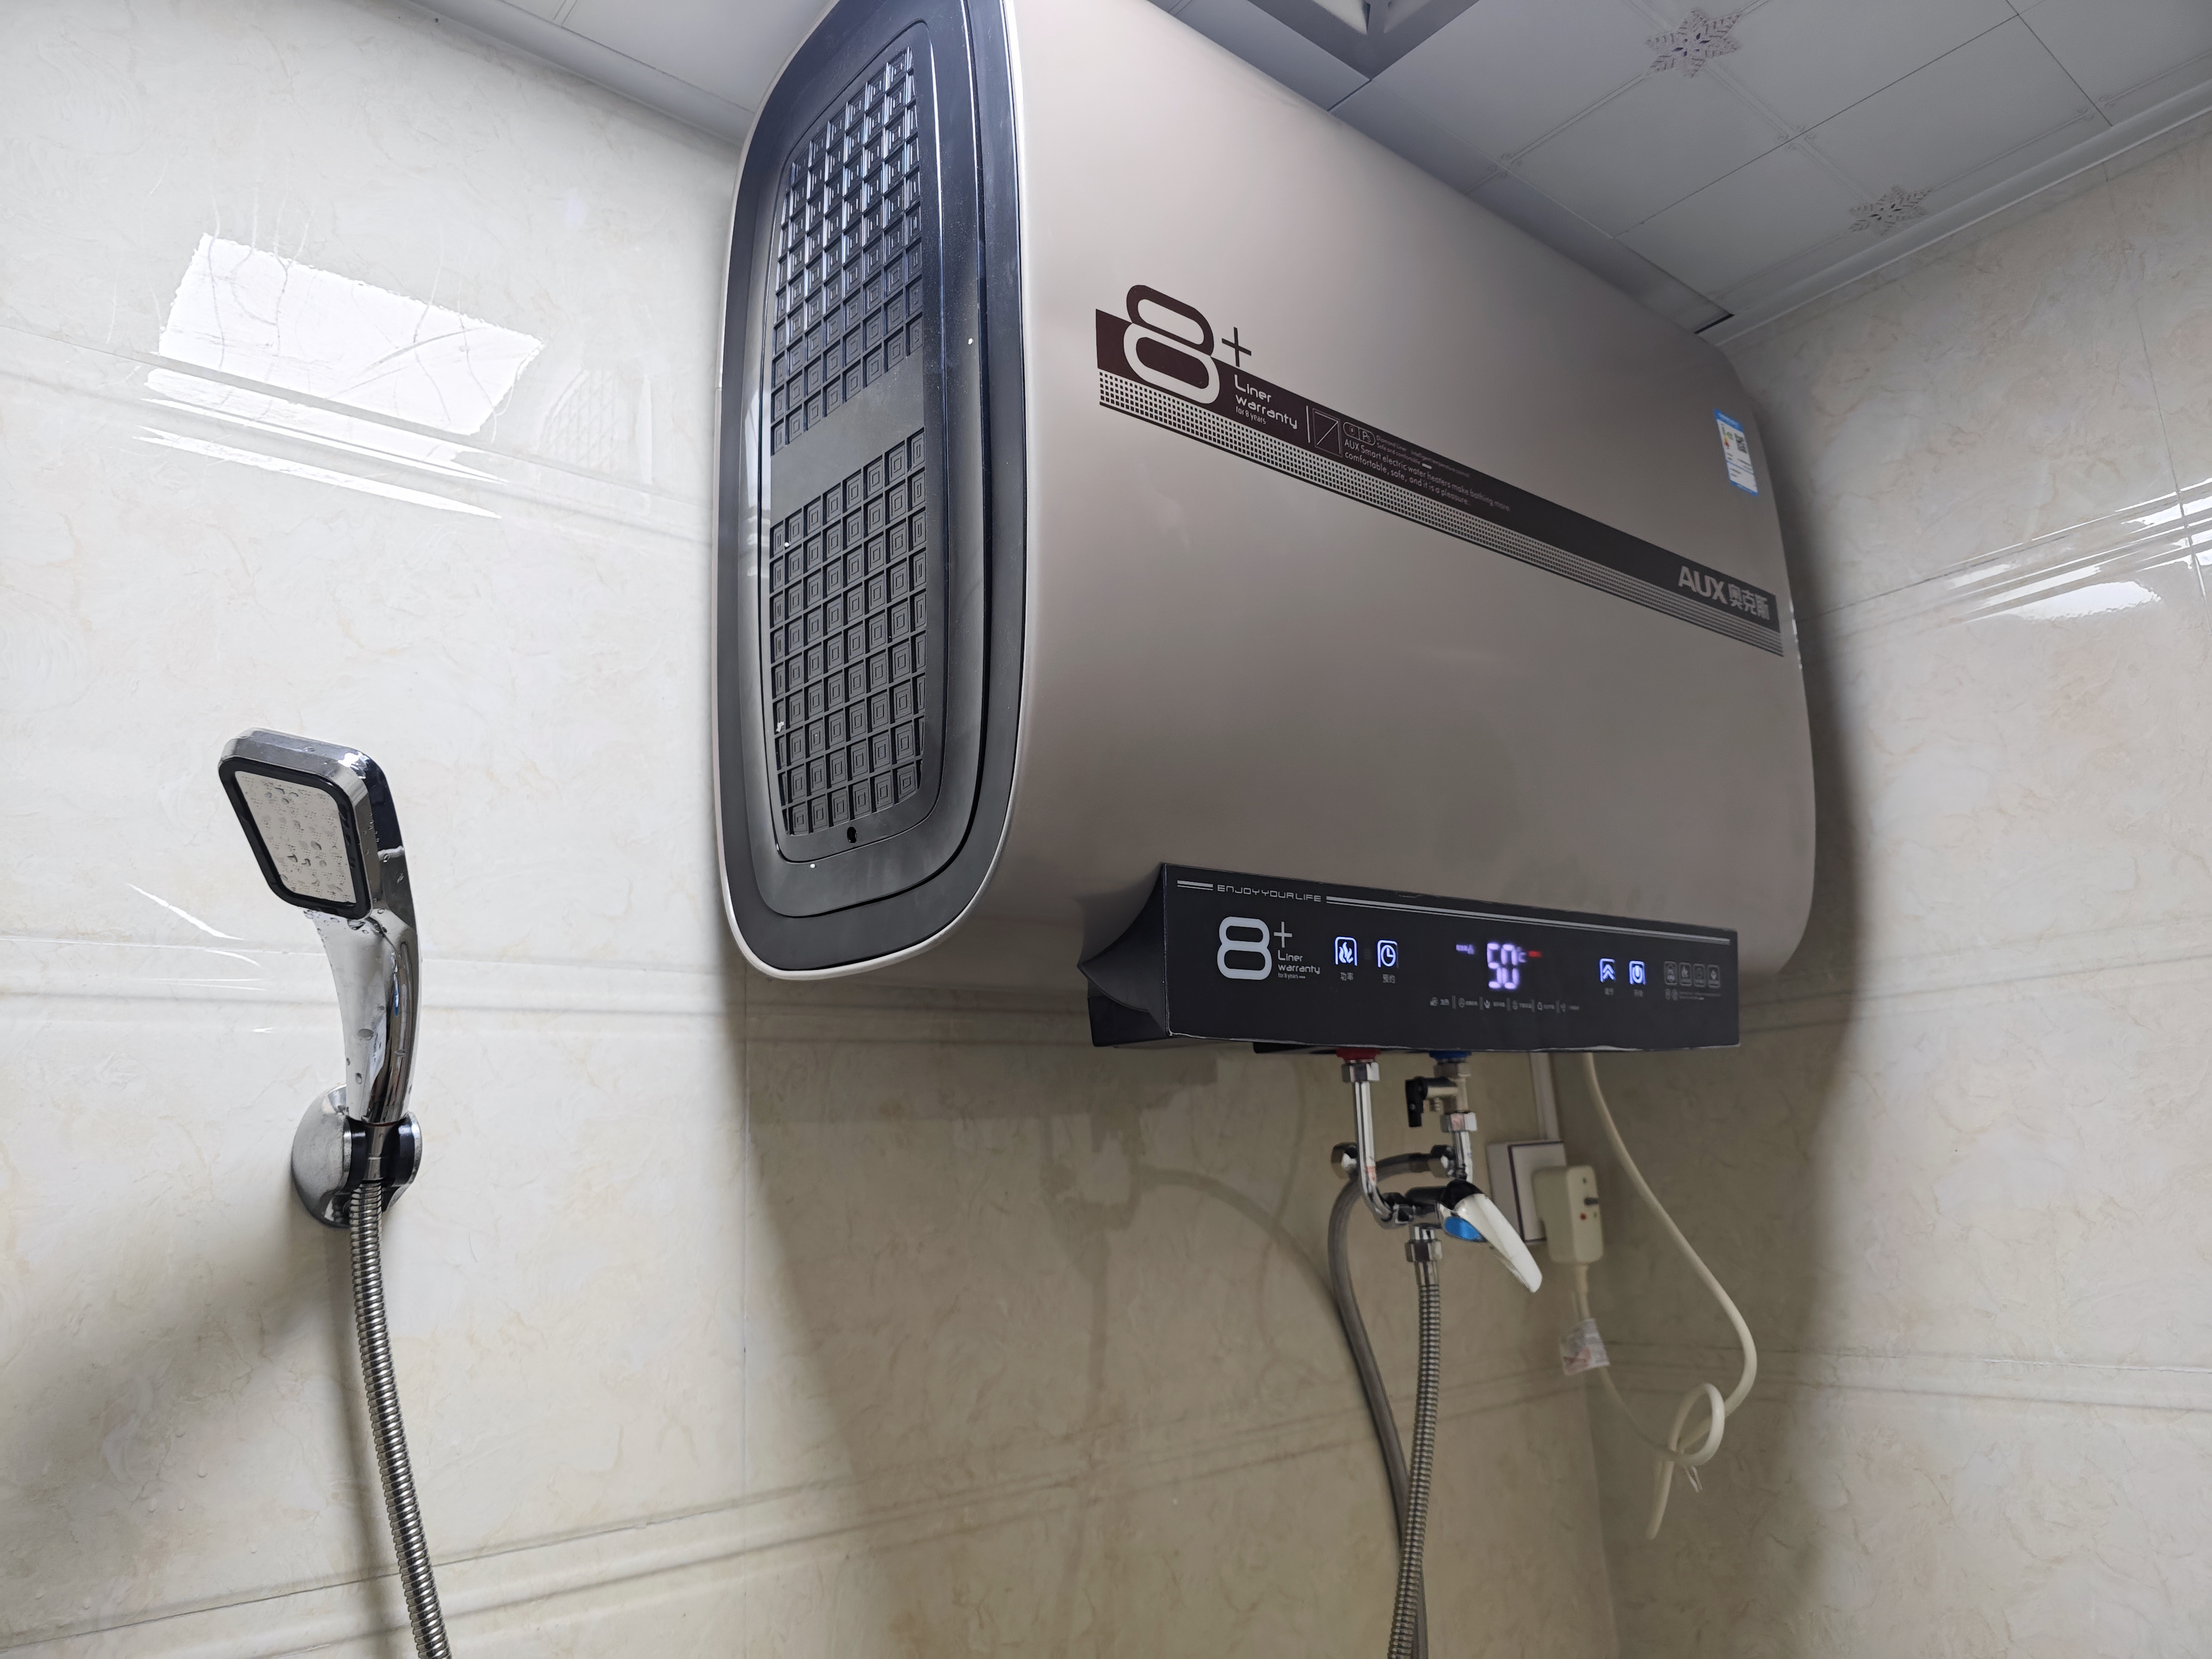 60-120L储水式电热水器安装 帮客安装上门服务晒单图